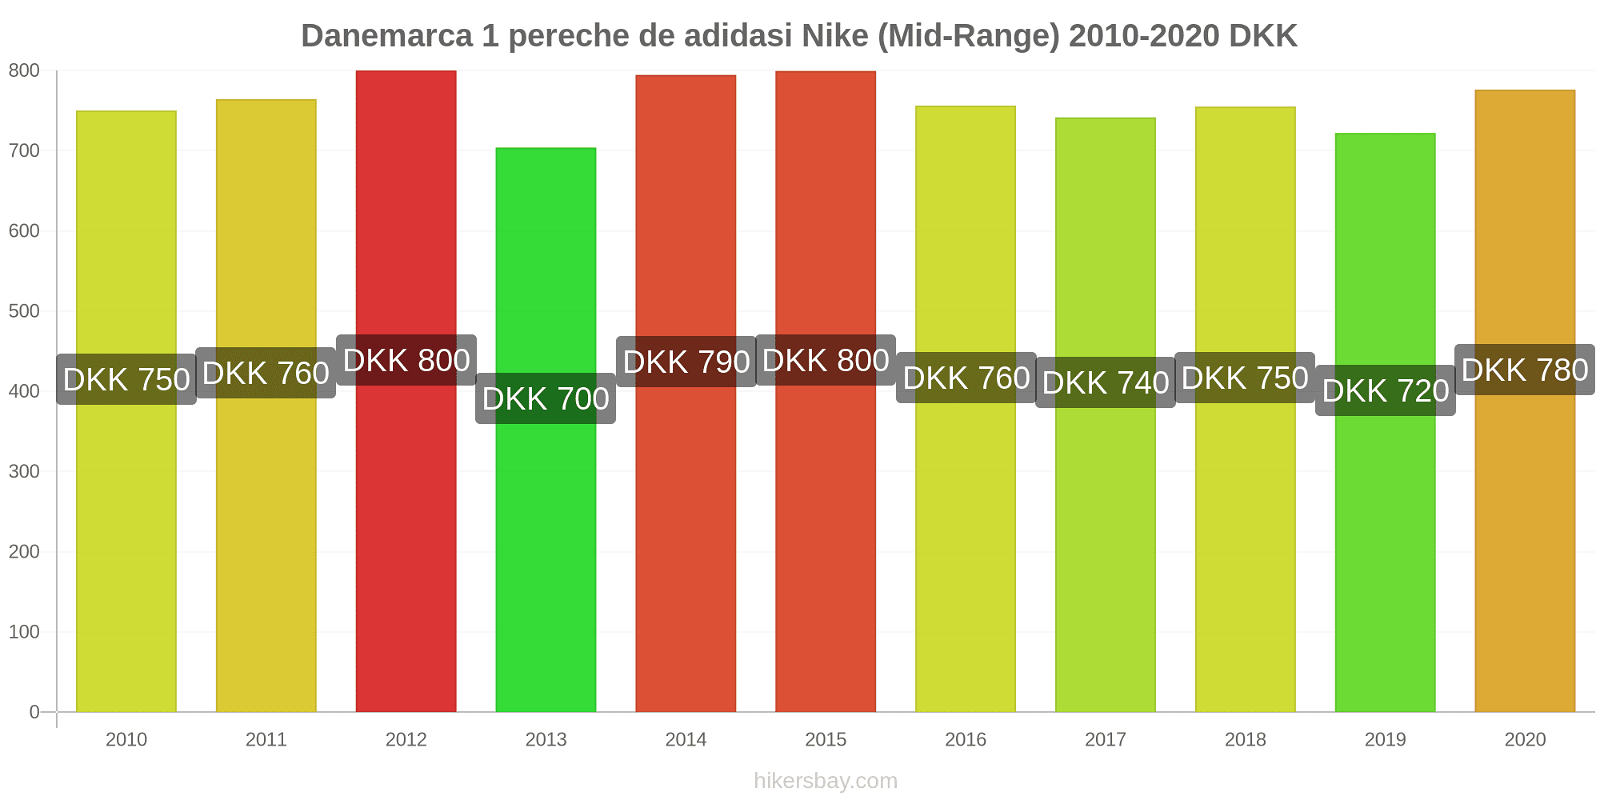 Danemarca modificări de preț 1 pereche de adidasi Nike (Mid-Range) hikersbay.com